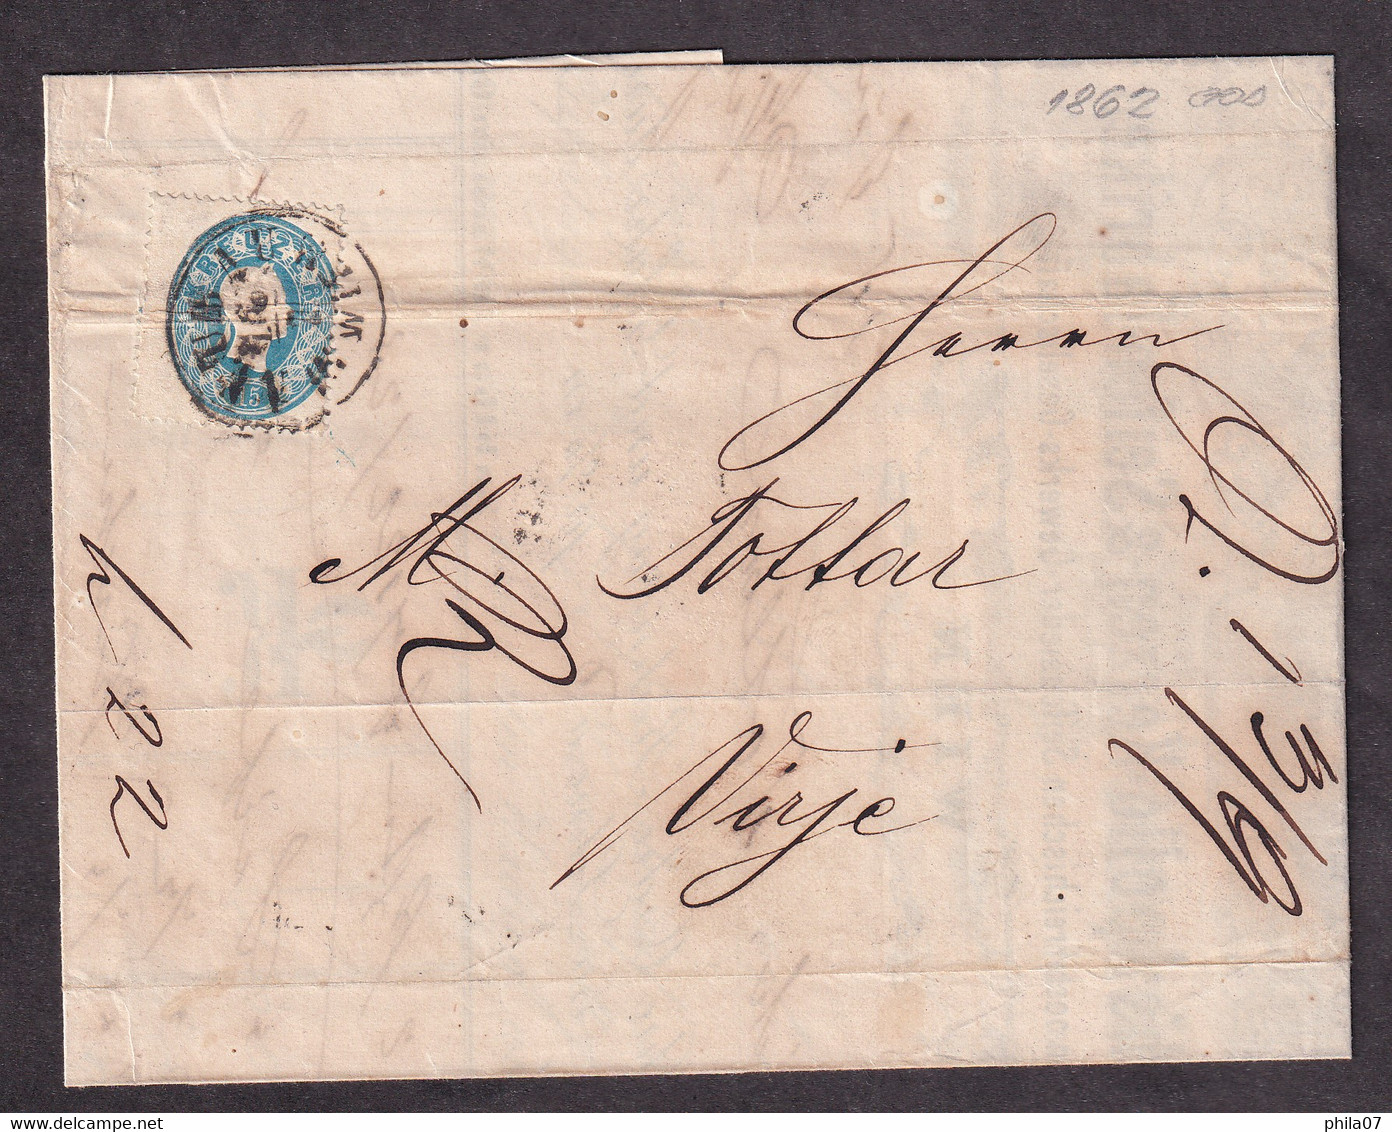 AUSTRIA - Invoice Sent As Letter Sent From Wien To Virje 1862. Interesting Cancels On The Back Of Letter - 3 Scans - Brieven En Documenten